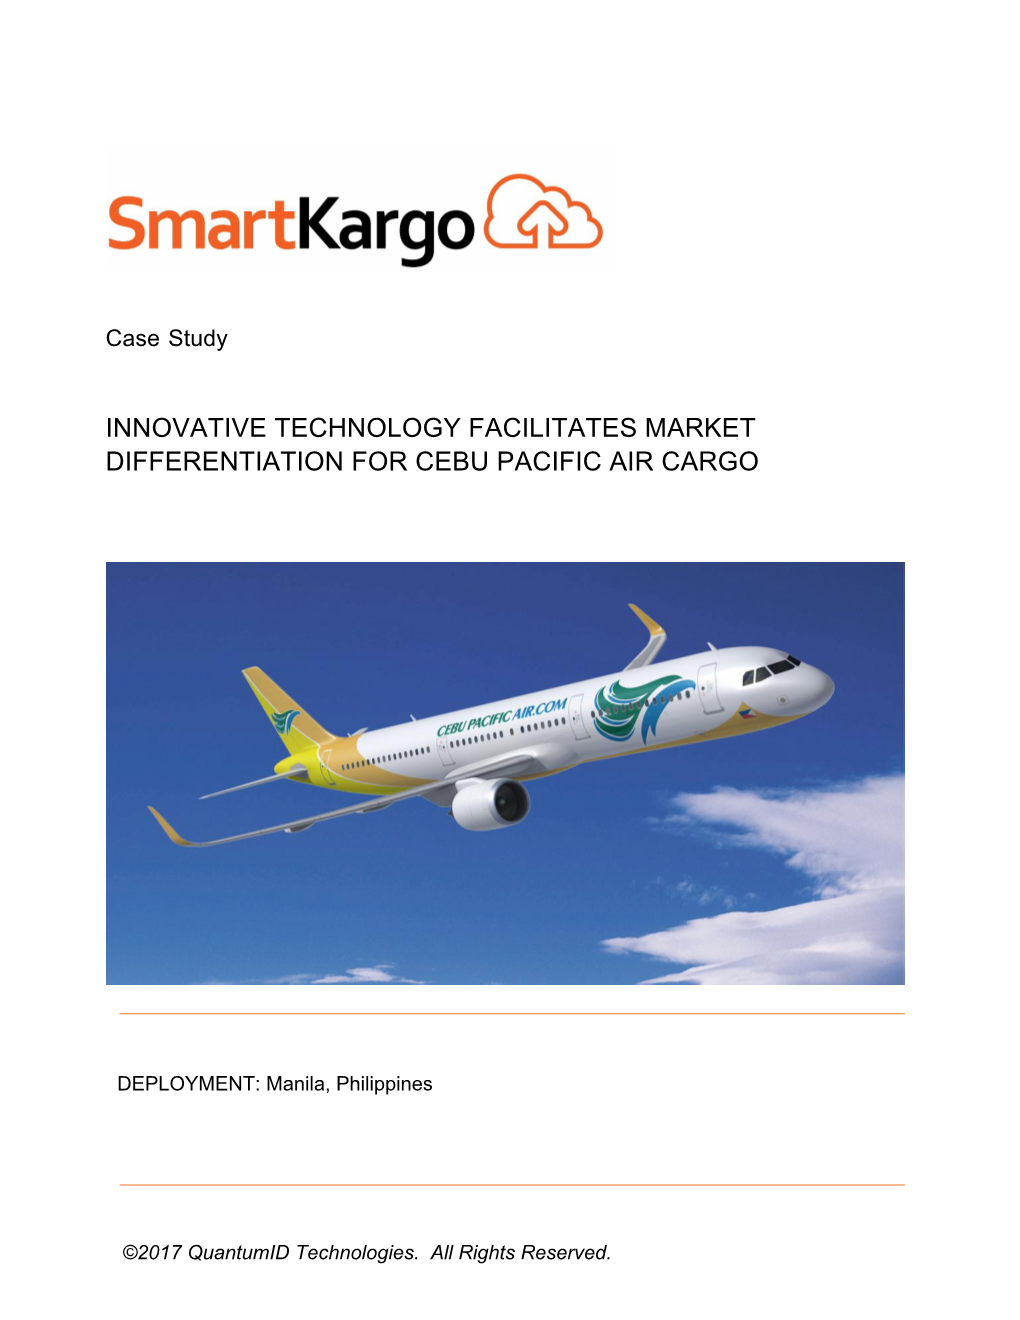 Innovative Technology Facilitates Market Differentiation for Cebu Pacific Air Cargo